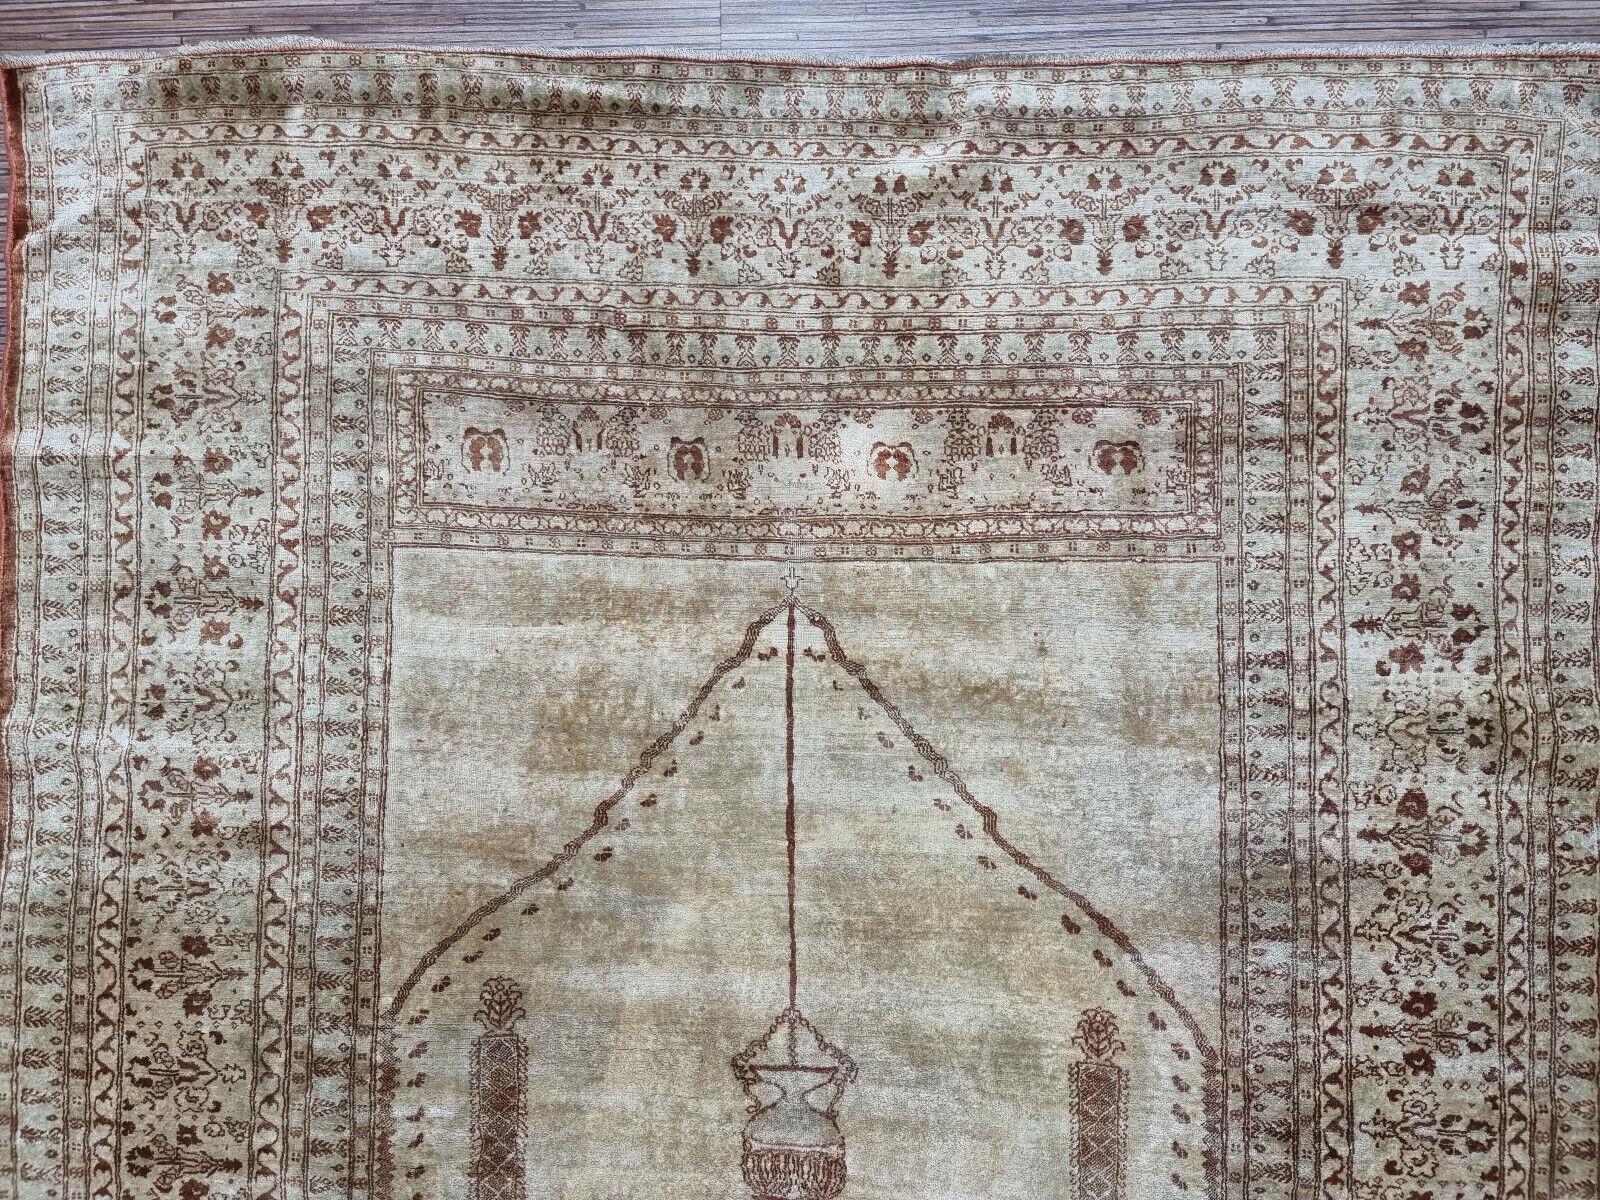 Early 20th Century Handmade Antique Persian Style Tabriz Prayer Silk Rug 4' x 5.2', 1900s - 1D83 For Sale